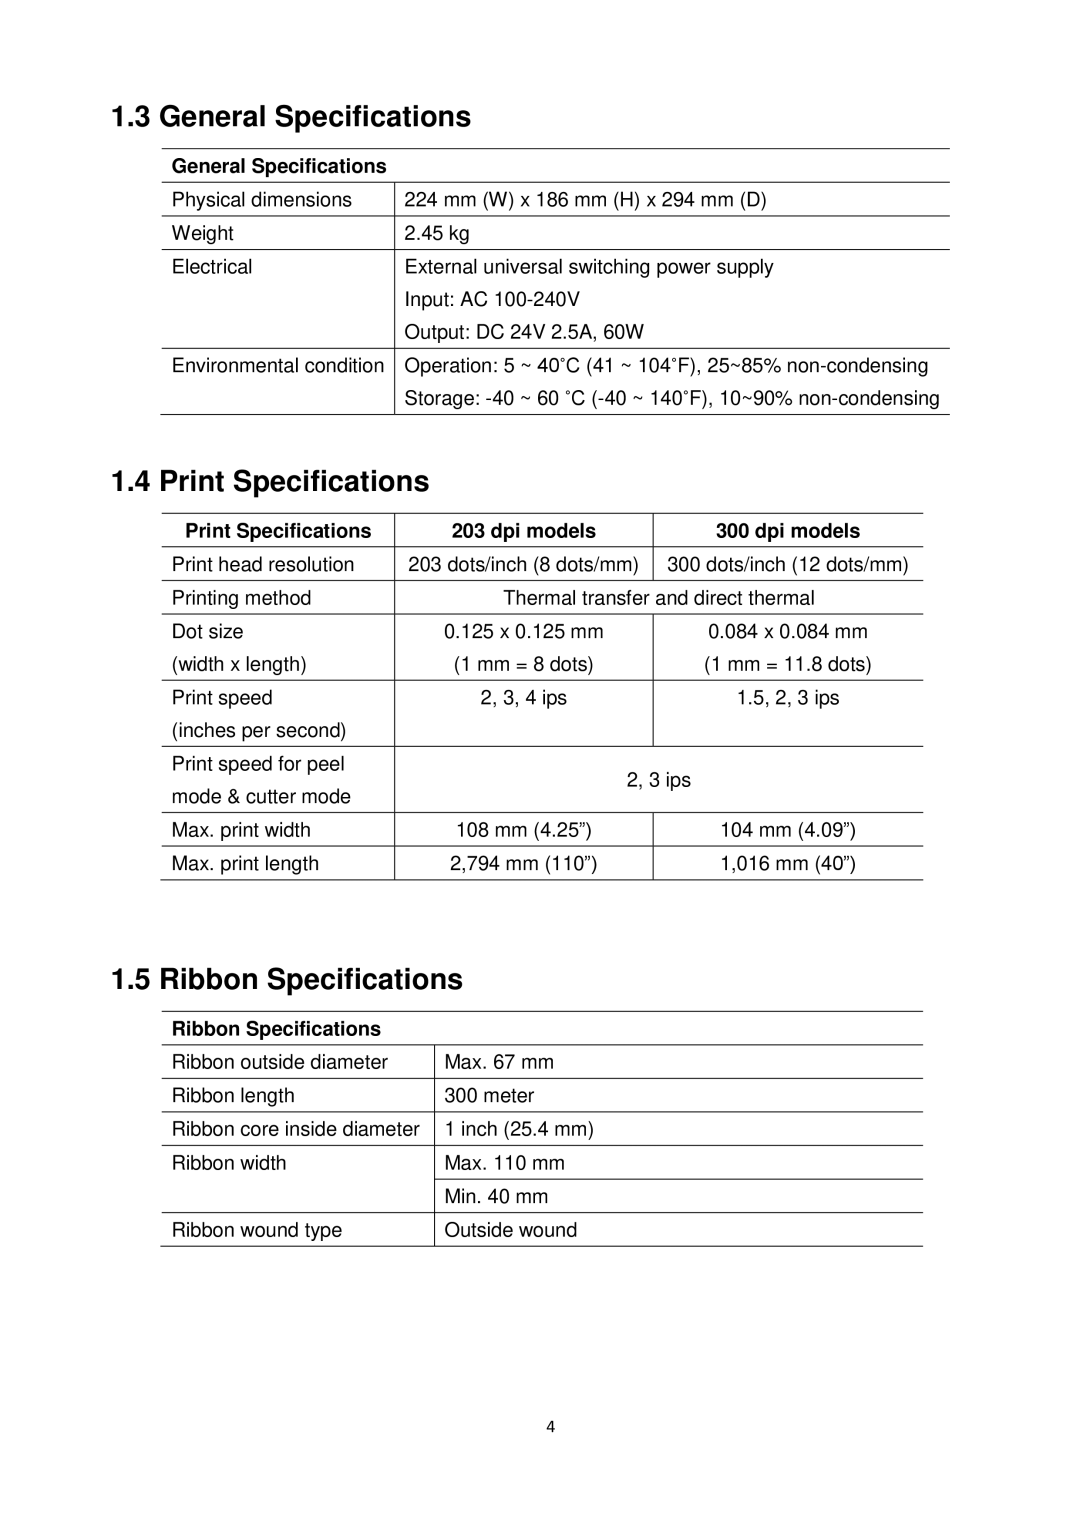 The Speaker Company ta200 manual General Specifications, Print Specifications, Ribbon Specifications, dpi models 